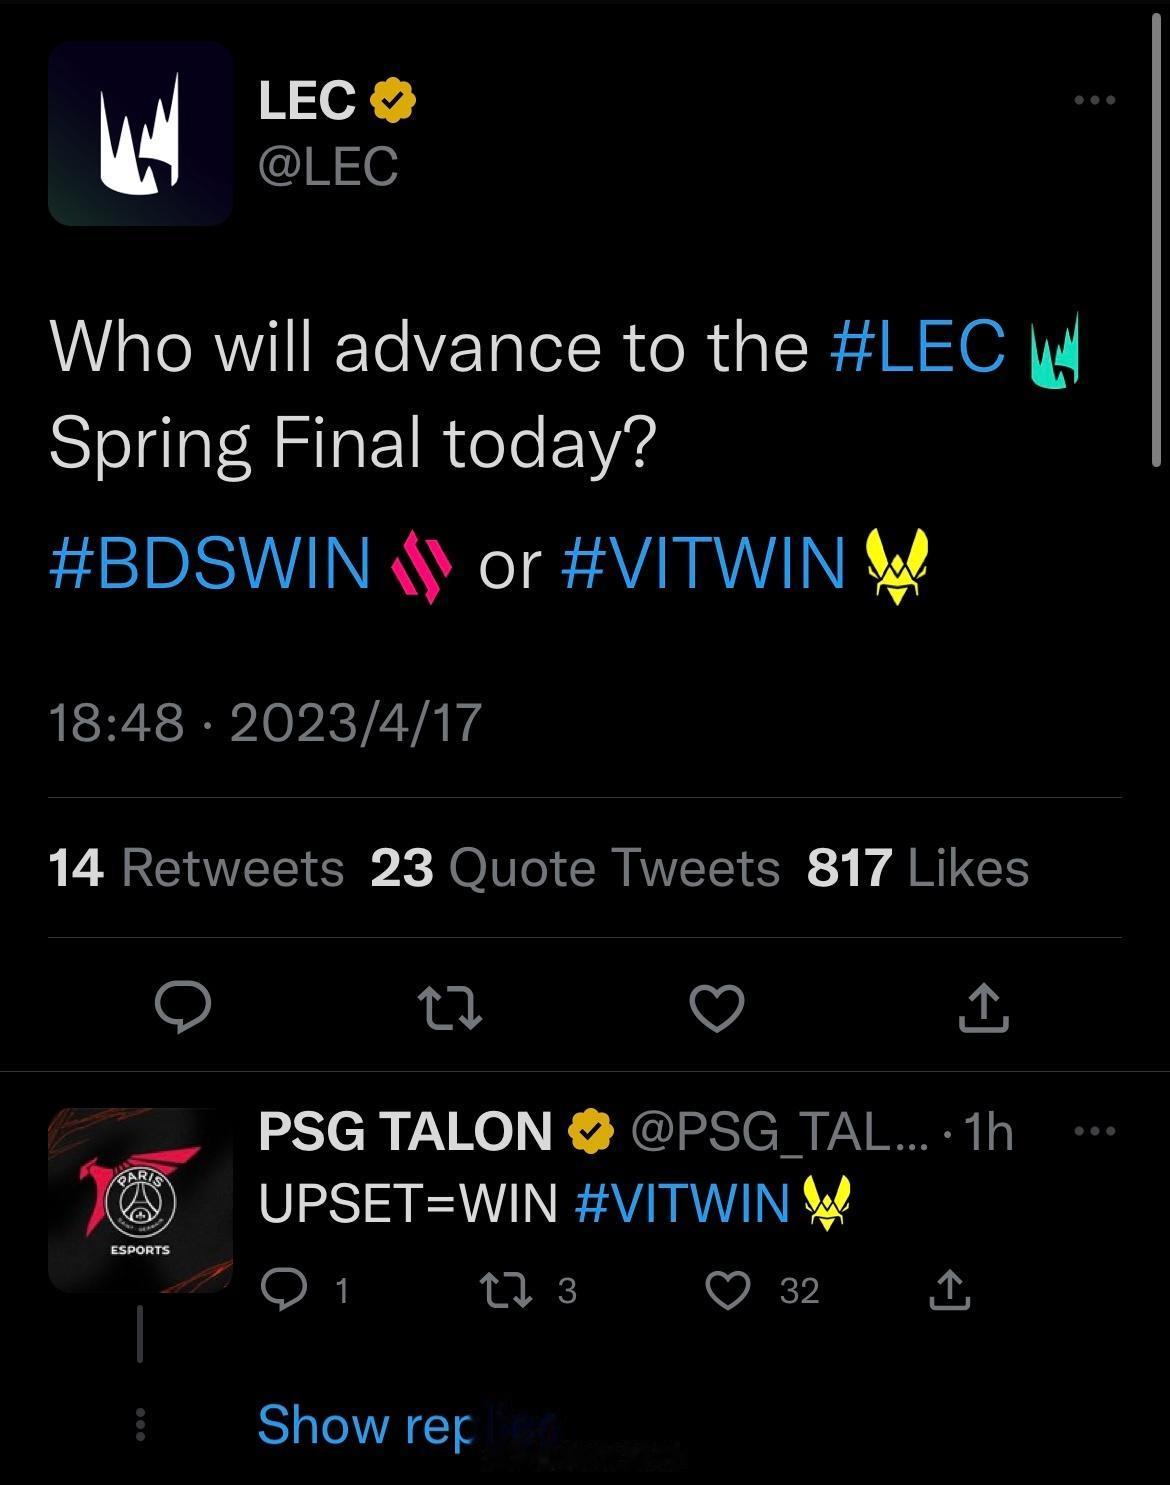 【LEC赛事预告】

LEC官方账号发布胜者组VIT与BDS赛事预告：今日谁将挺